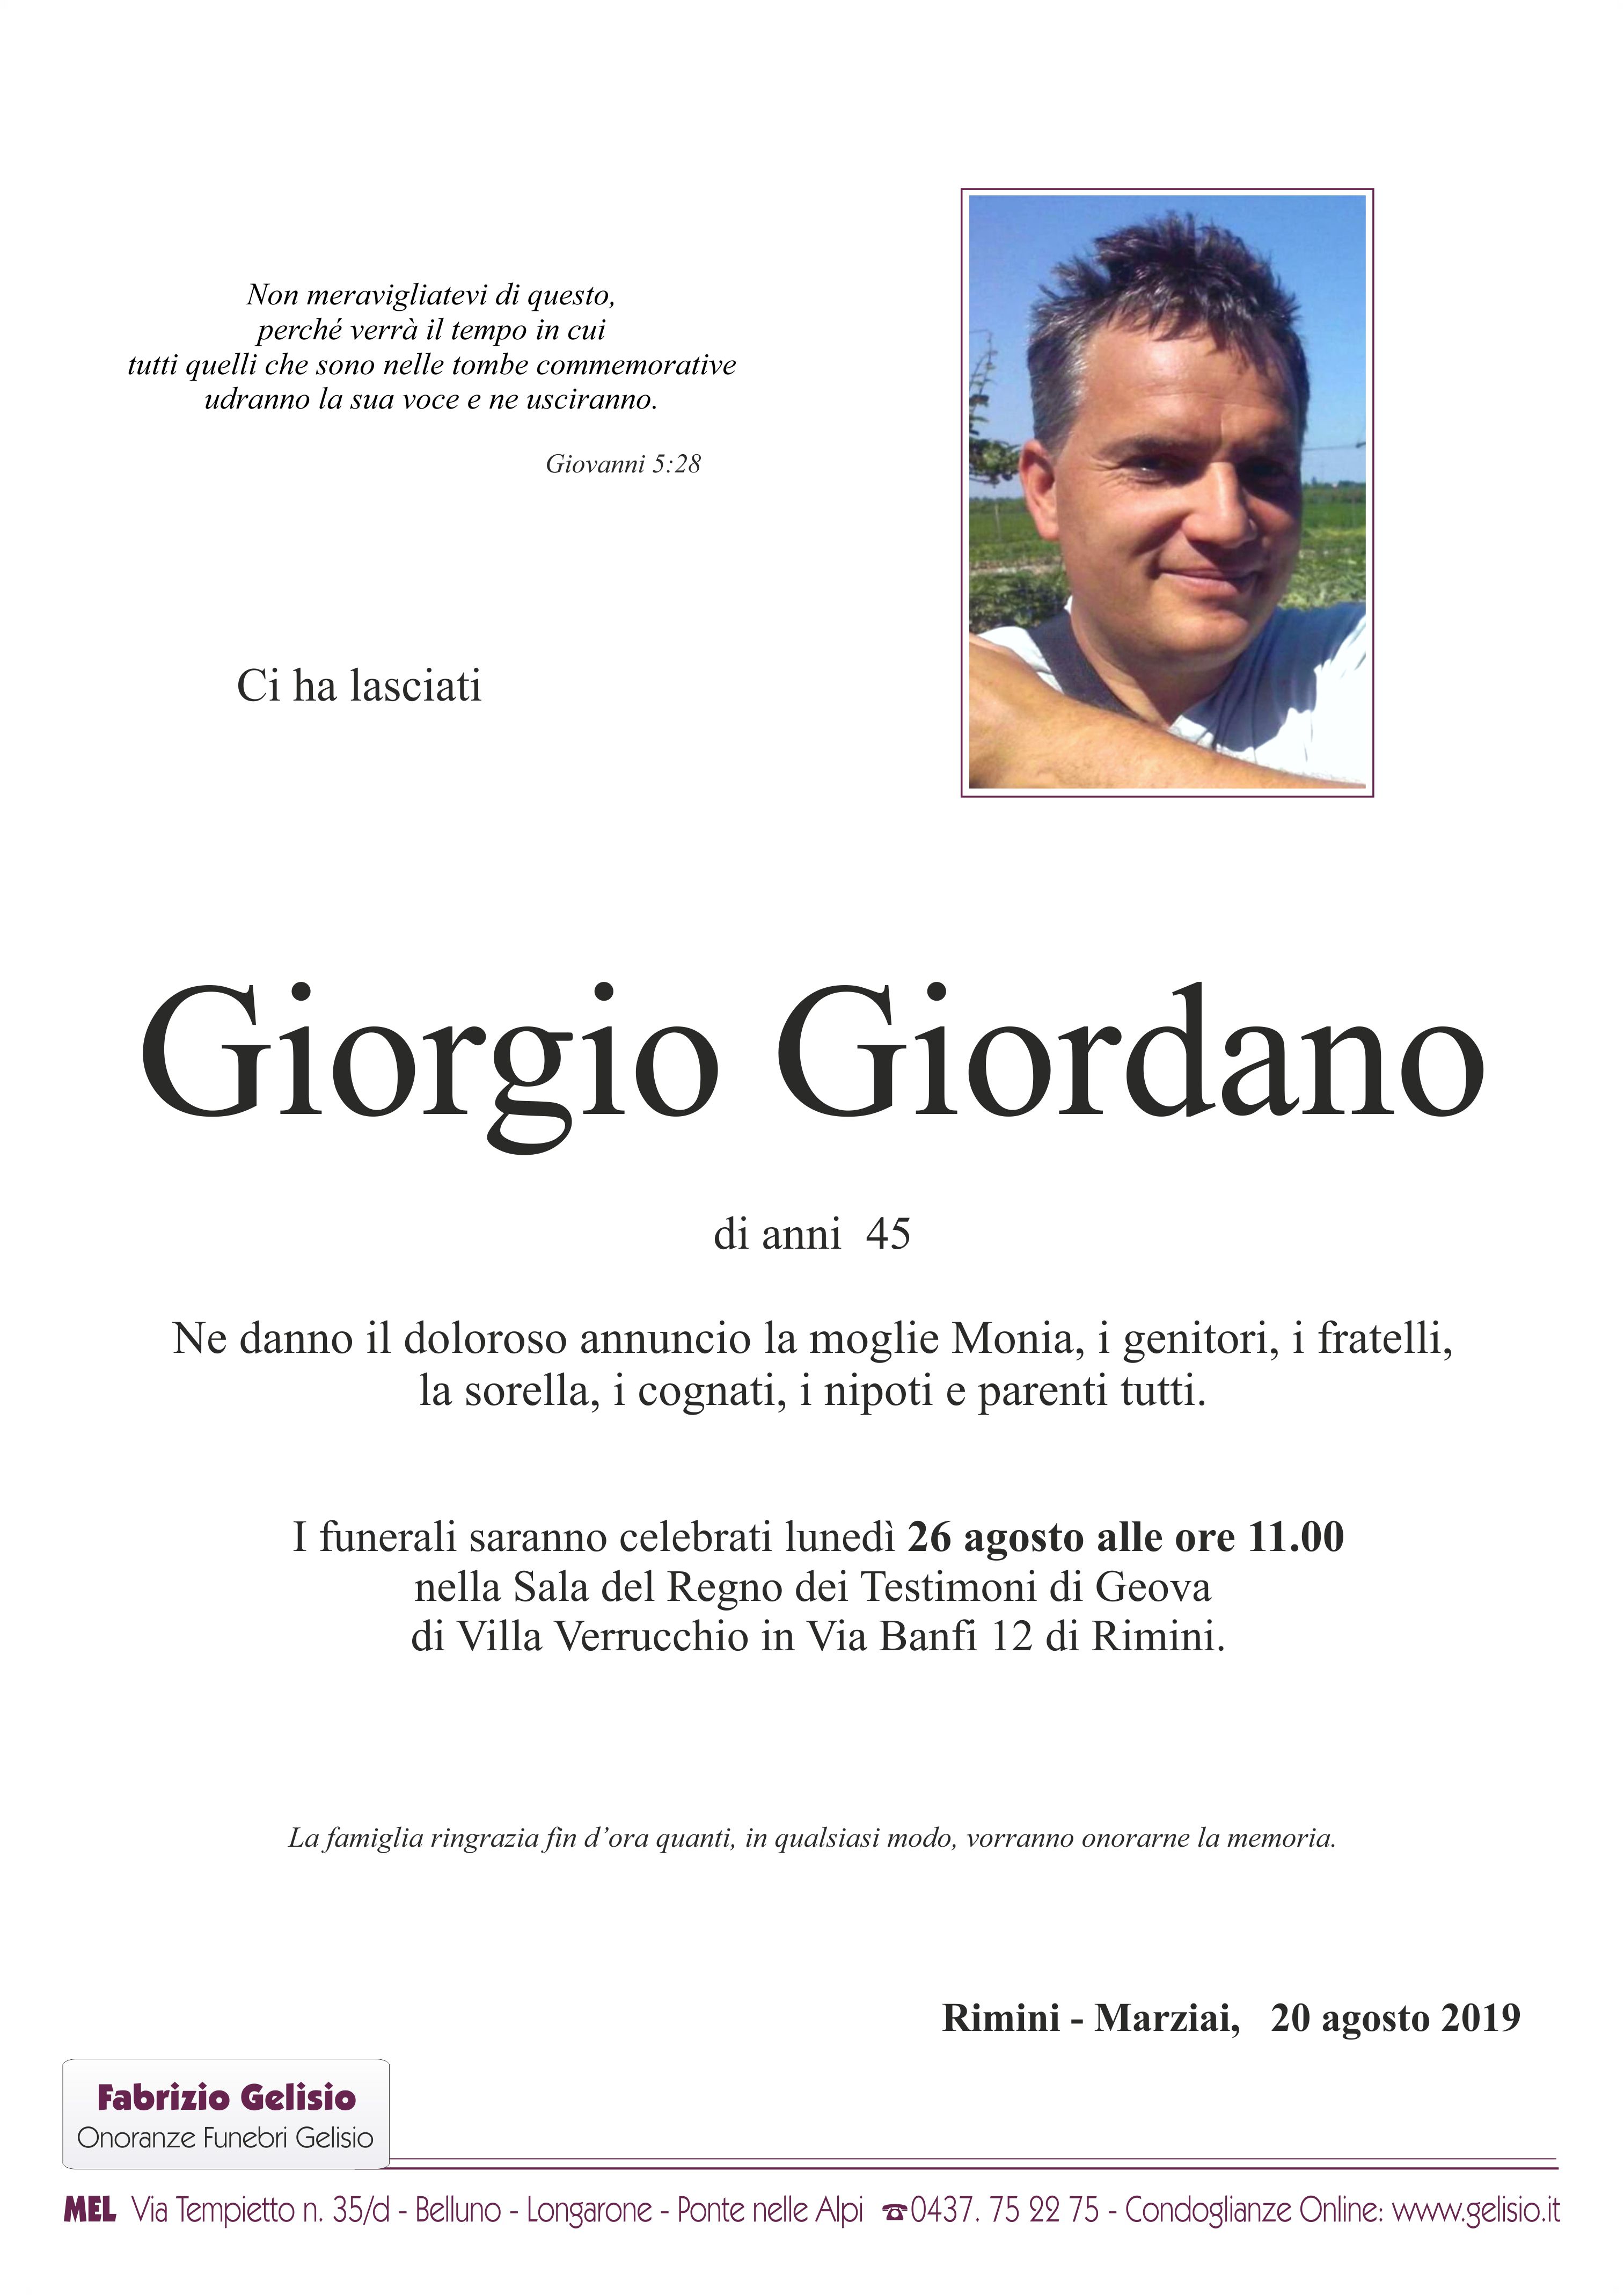 Giorgio_Giordano.jpg